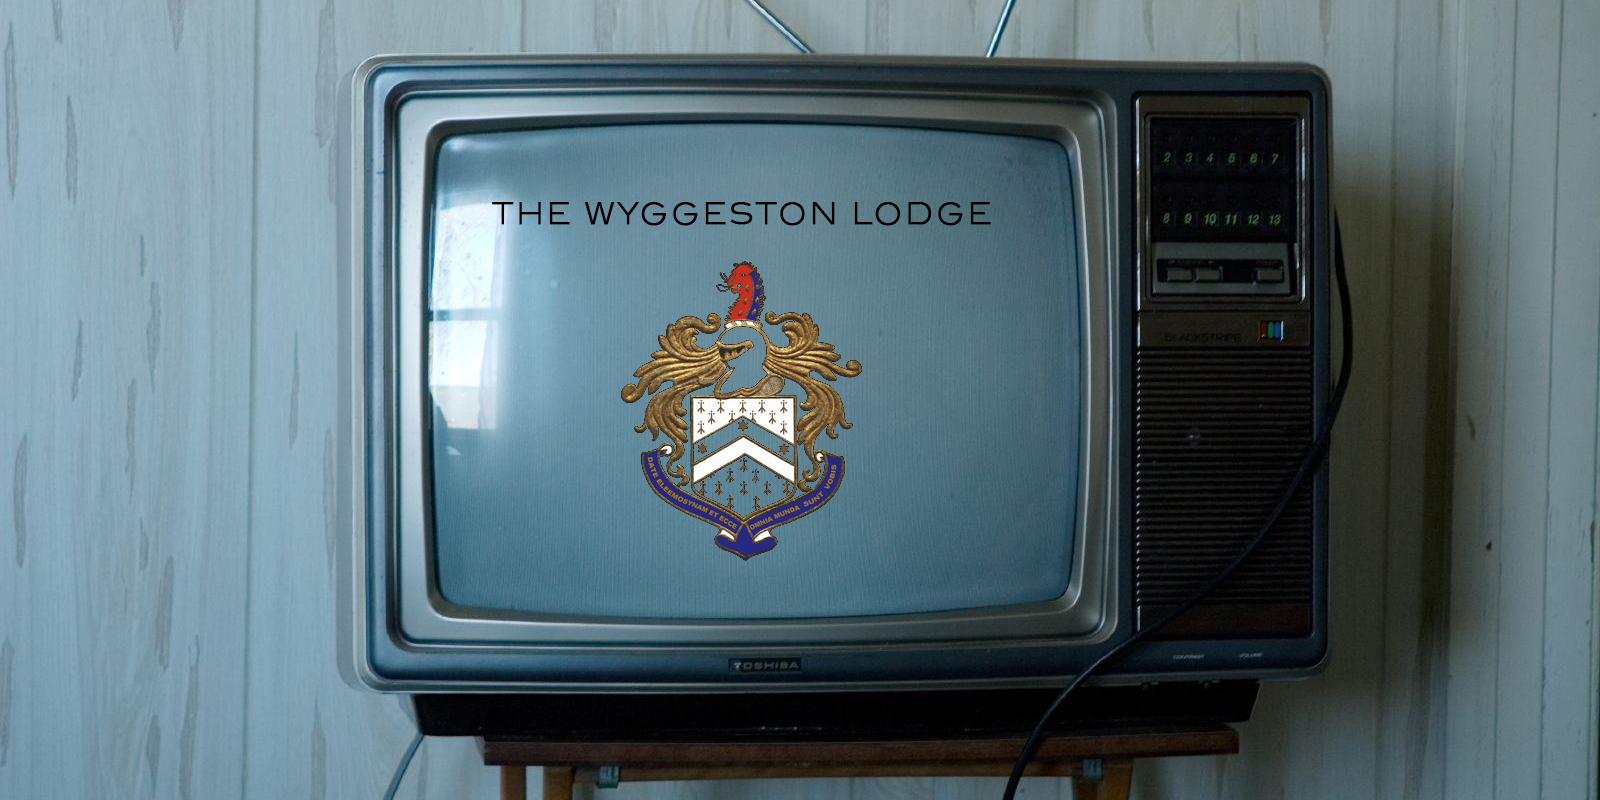 THE WYGGESTON LODGE on TV